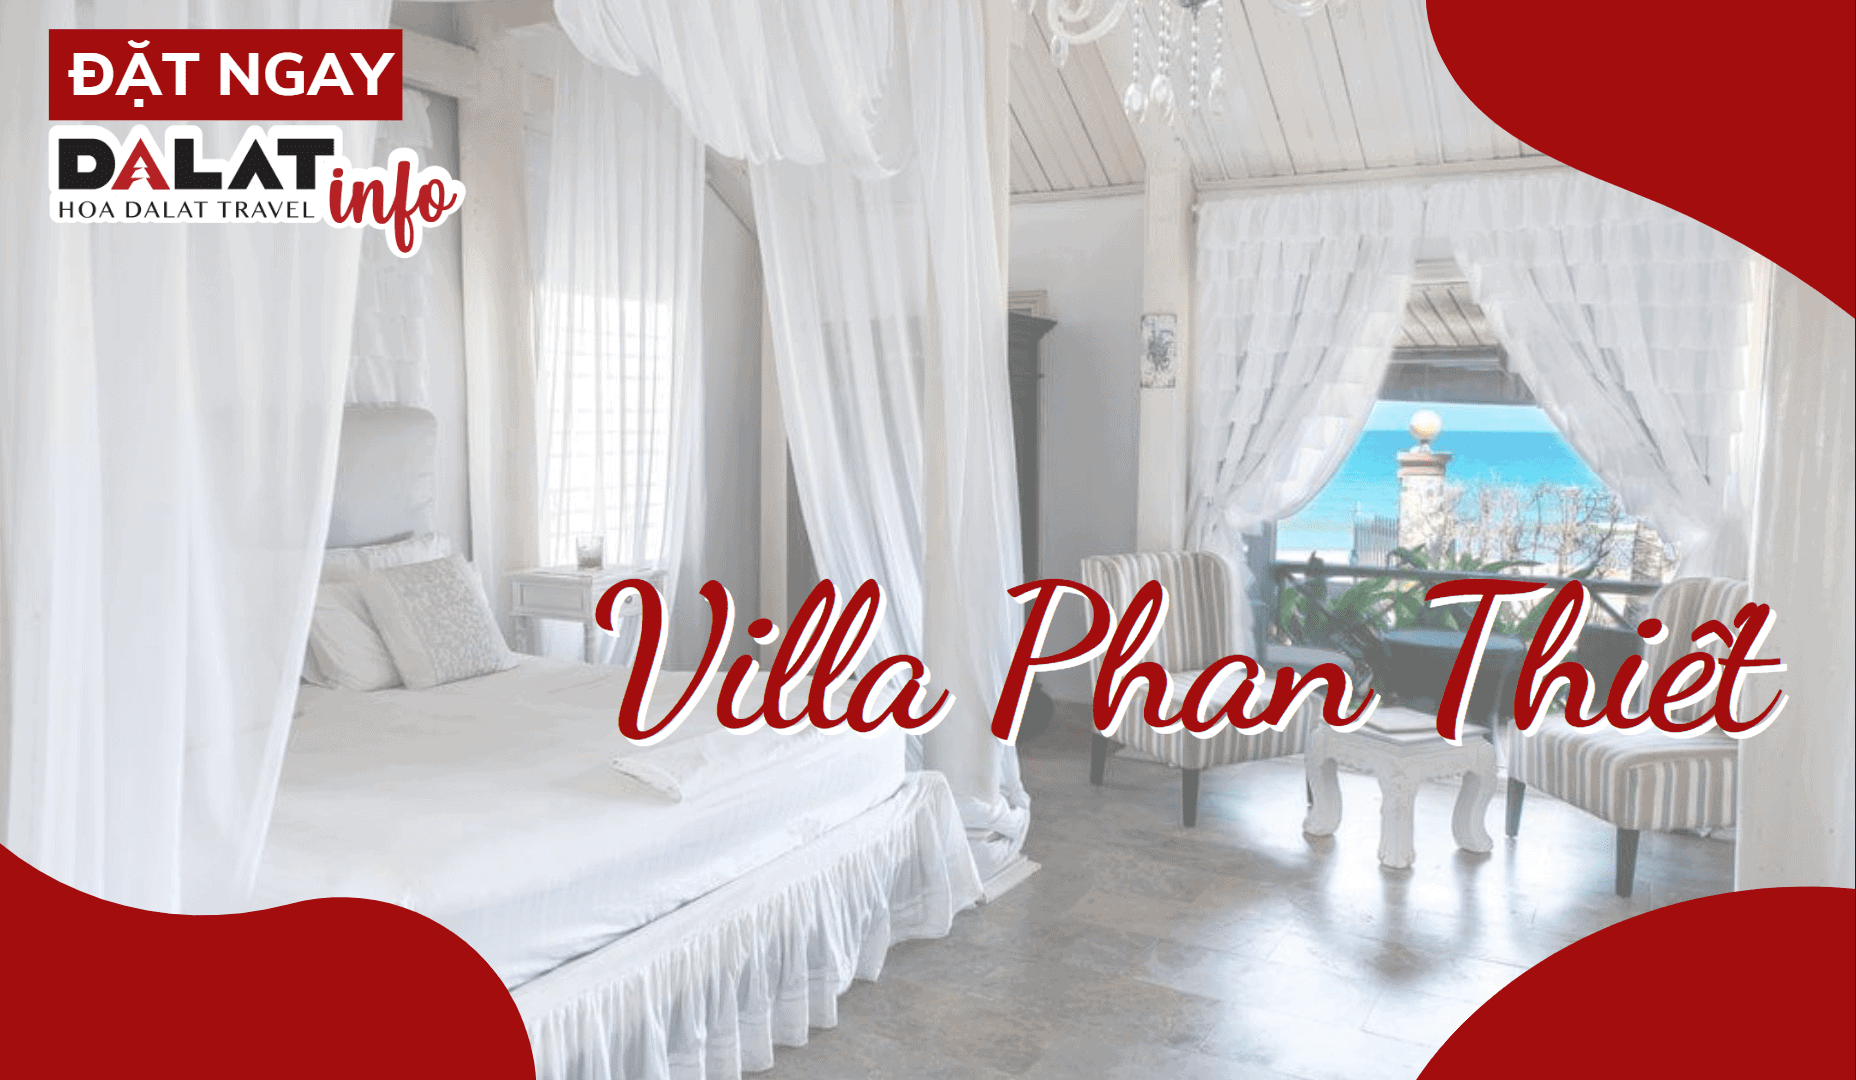 Villa Phan Thiết